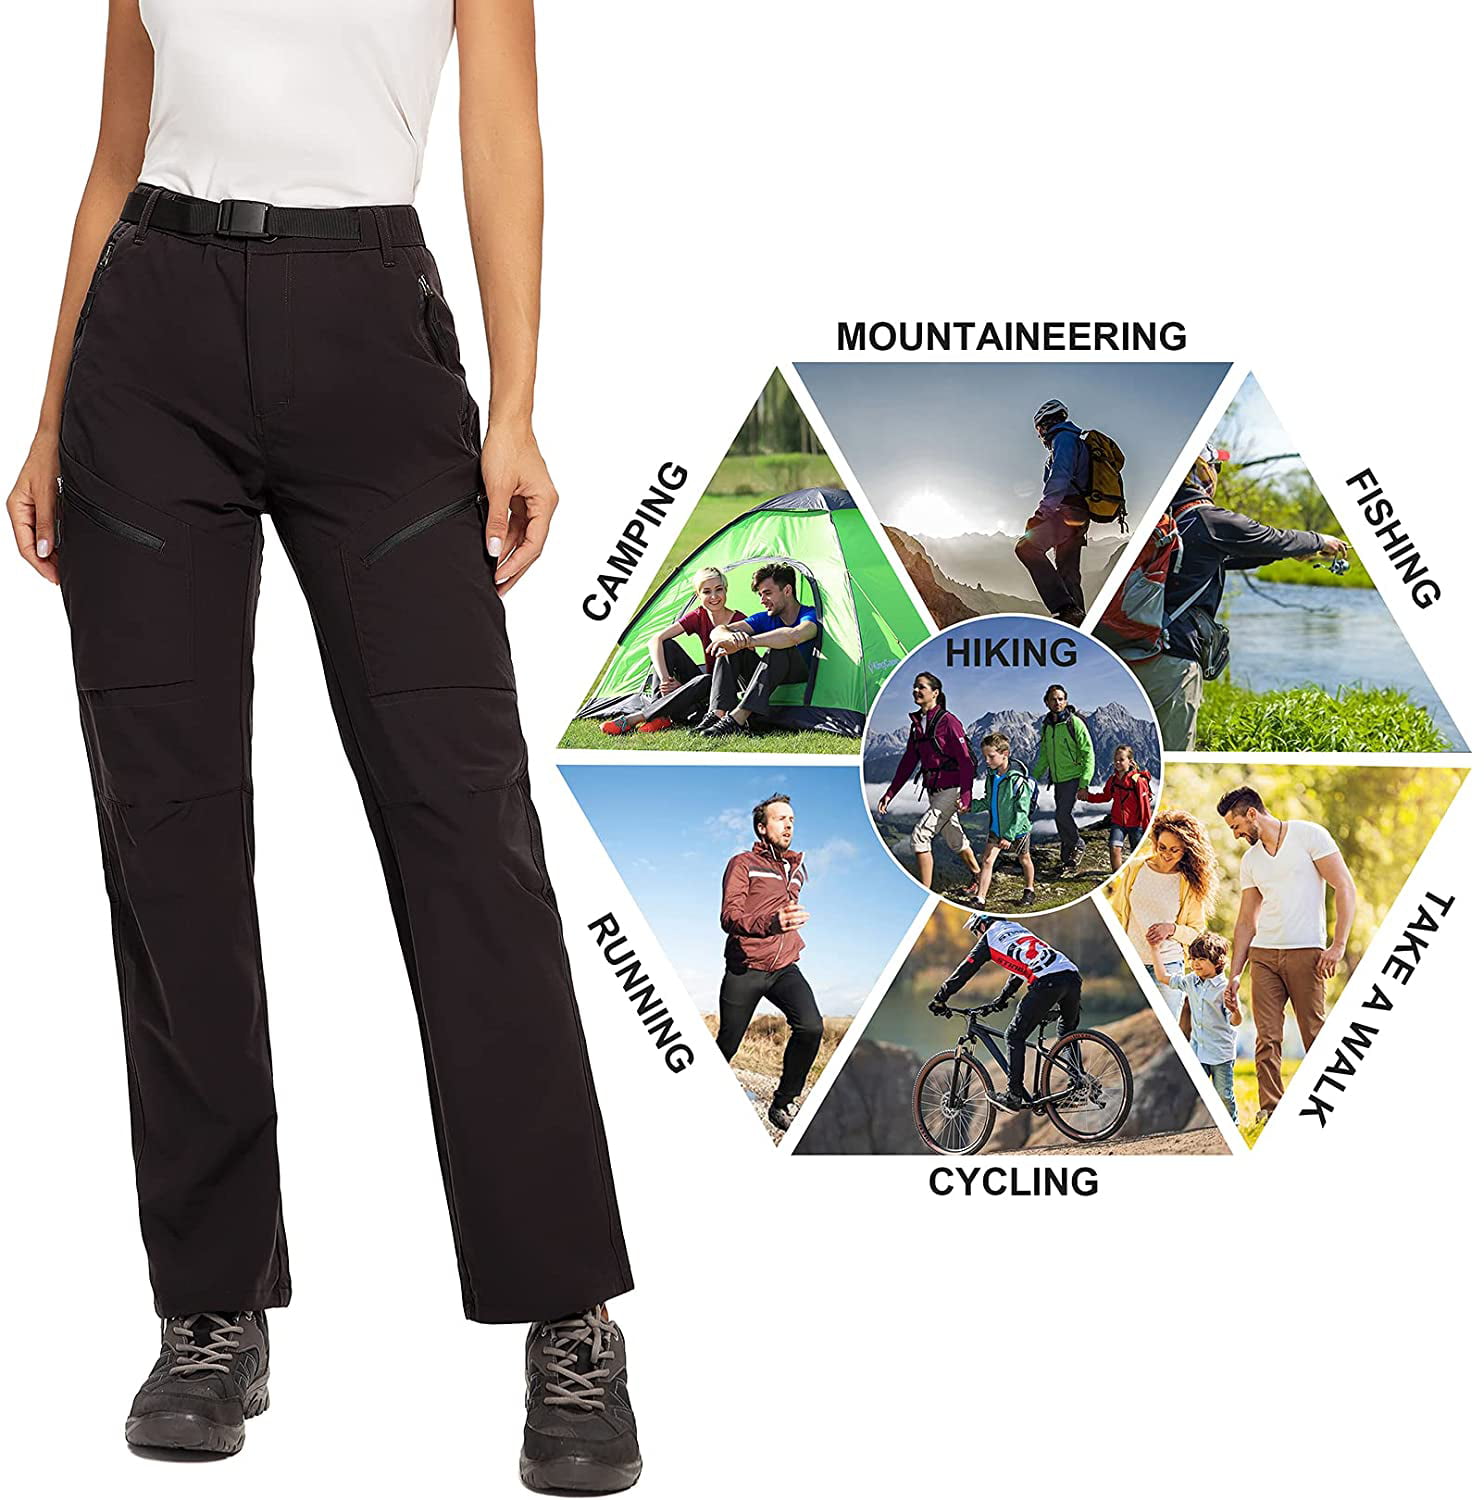 MoFiz Women's Cargo Capris Hiking Running Pants Lightweight Quick Dry Outdoor Athletic Shorts Khaki Loose Button Pockets 